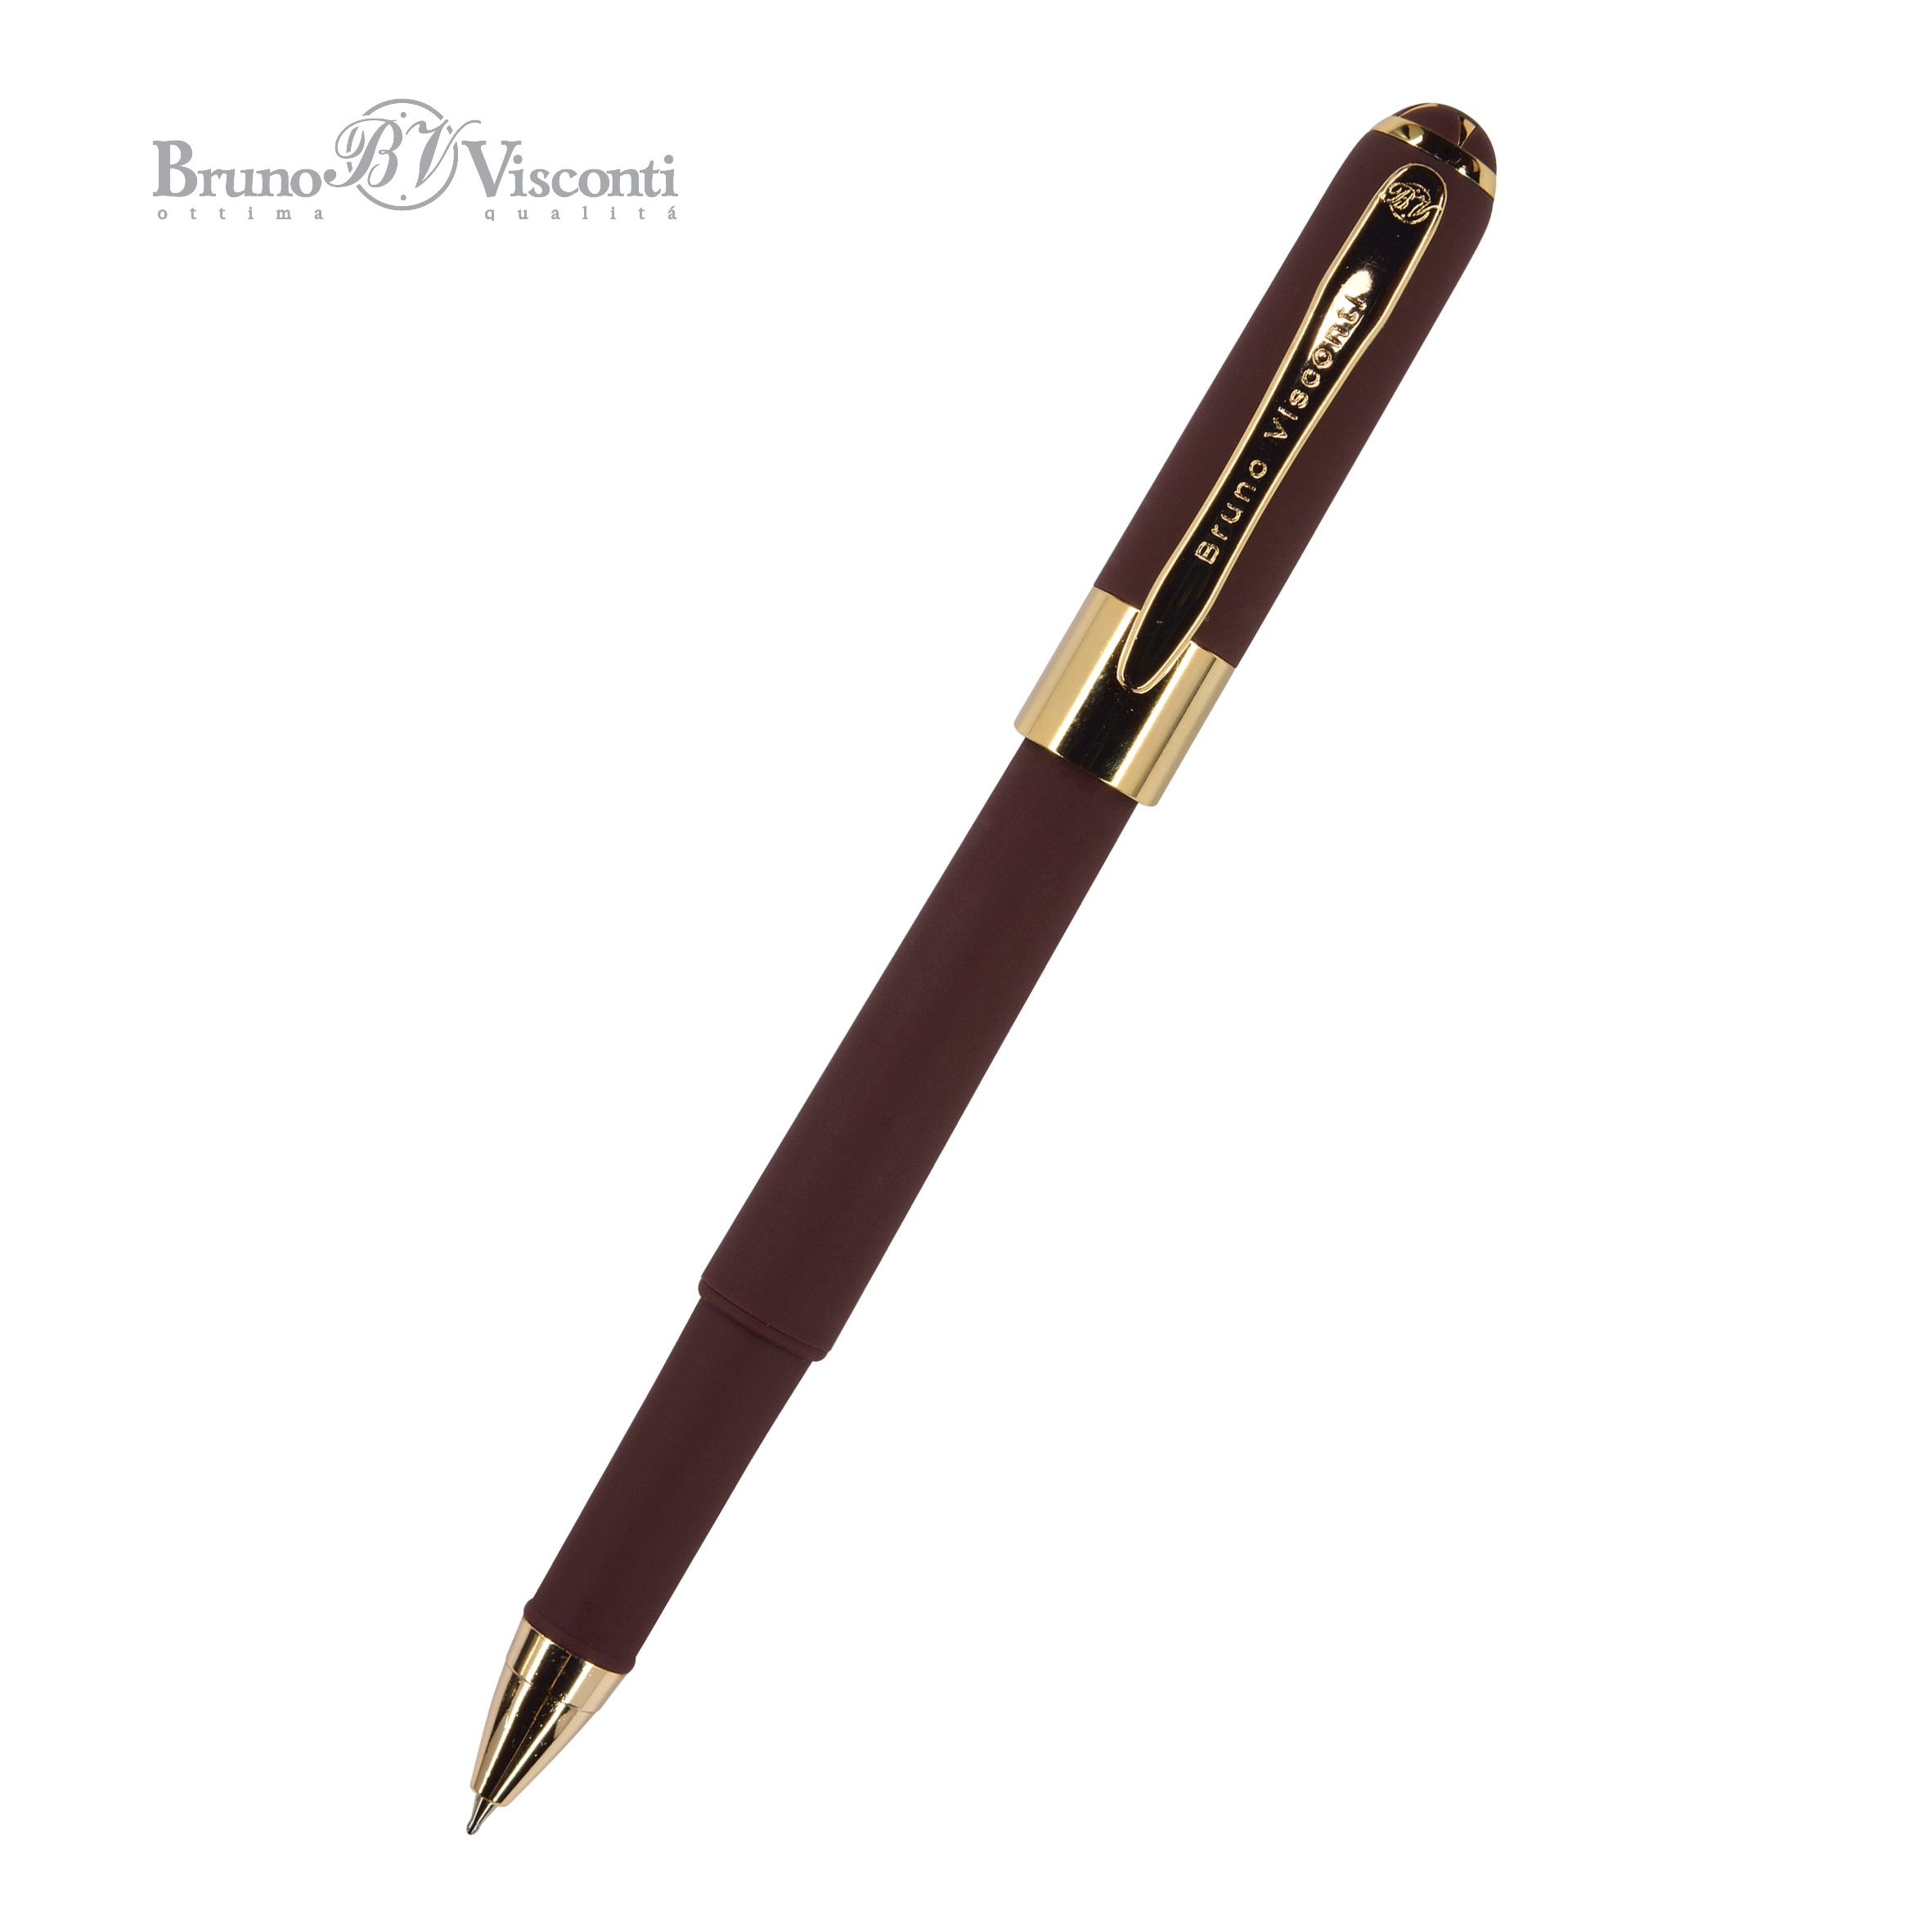 Ручка подар шар BV Monaco синяя 0,5мм коричневый корпус